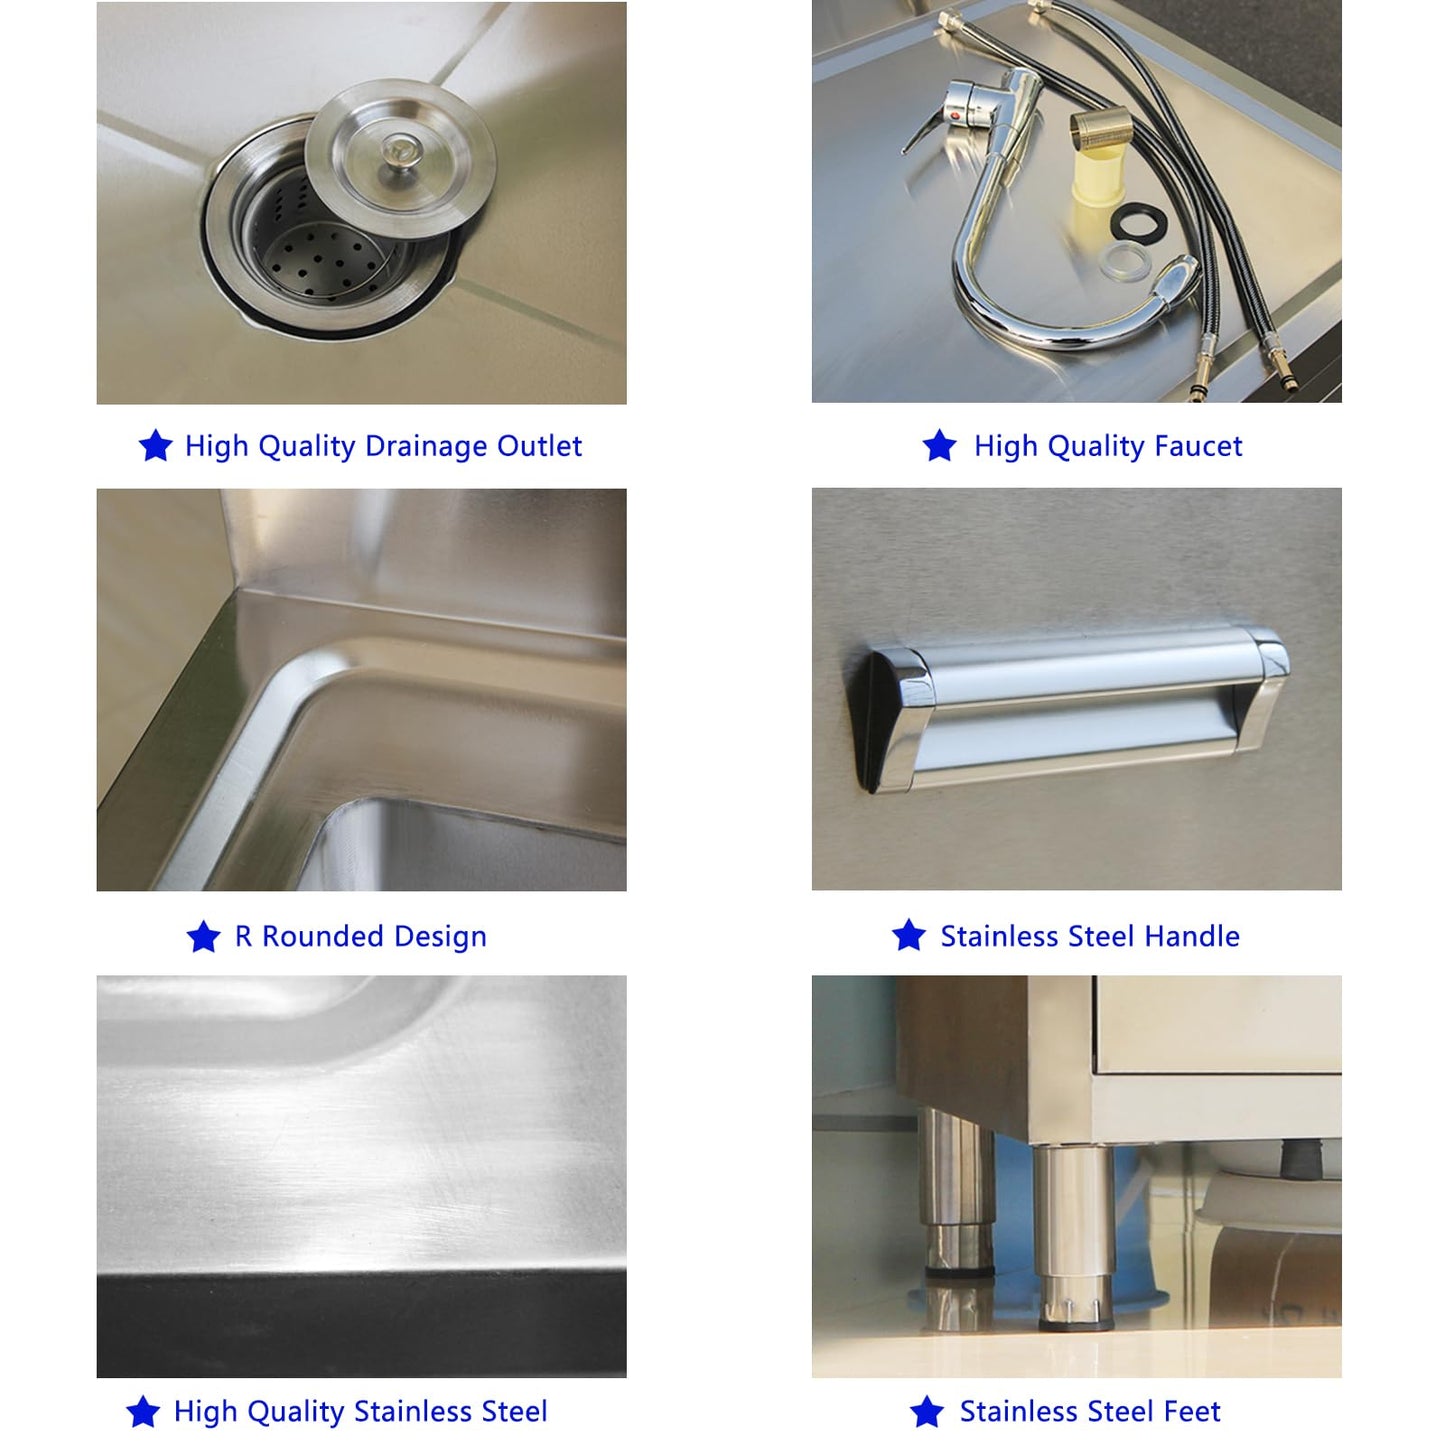 Single Bowl Sink Cabinet - 1700mm x 700mm x 900mmH - RHS Work Area